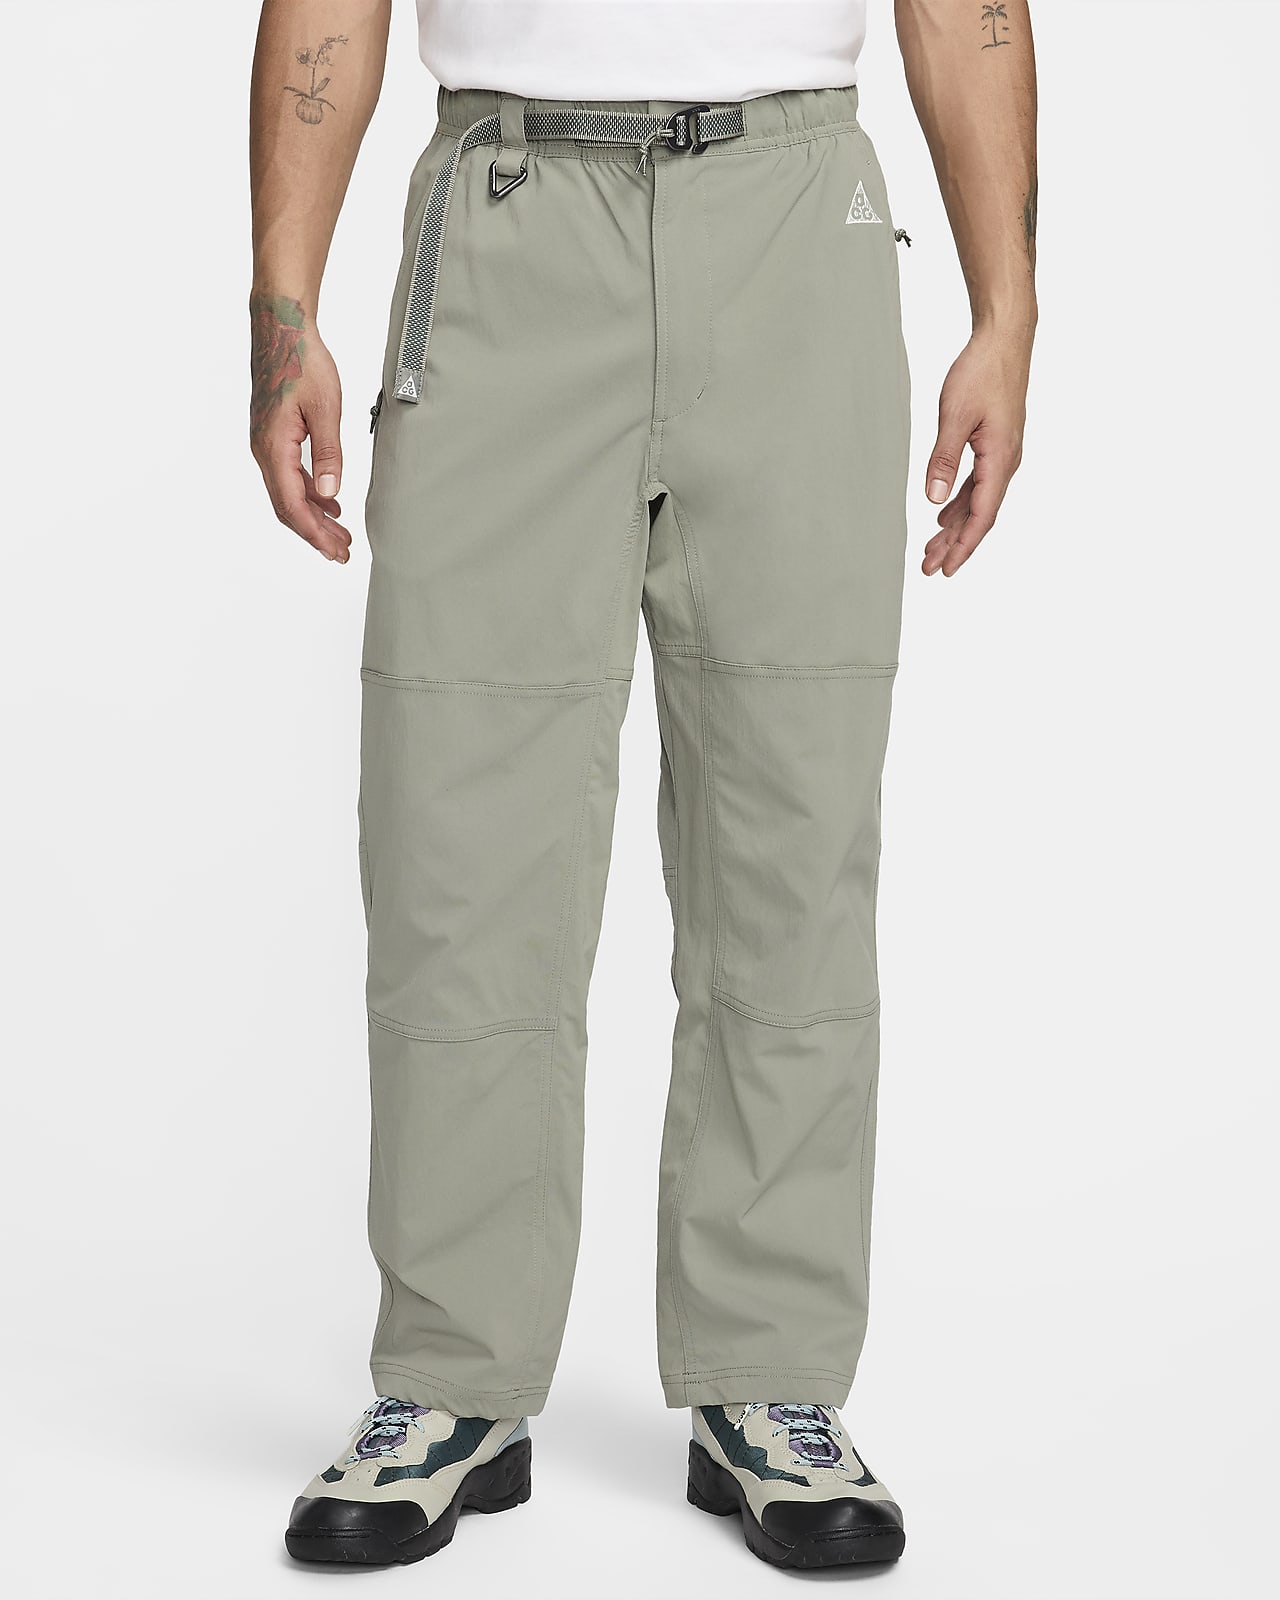 Nike ACG Pantalons de senderisme amb protecció UV - Home